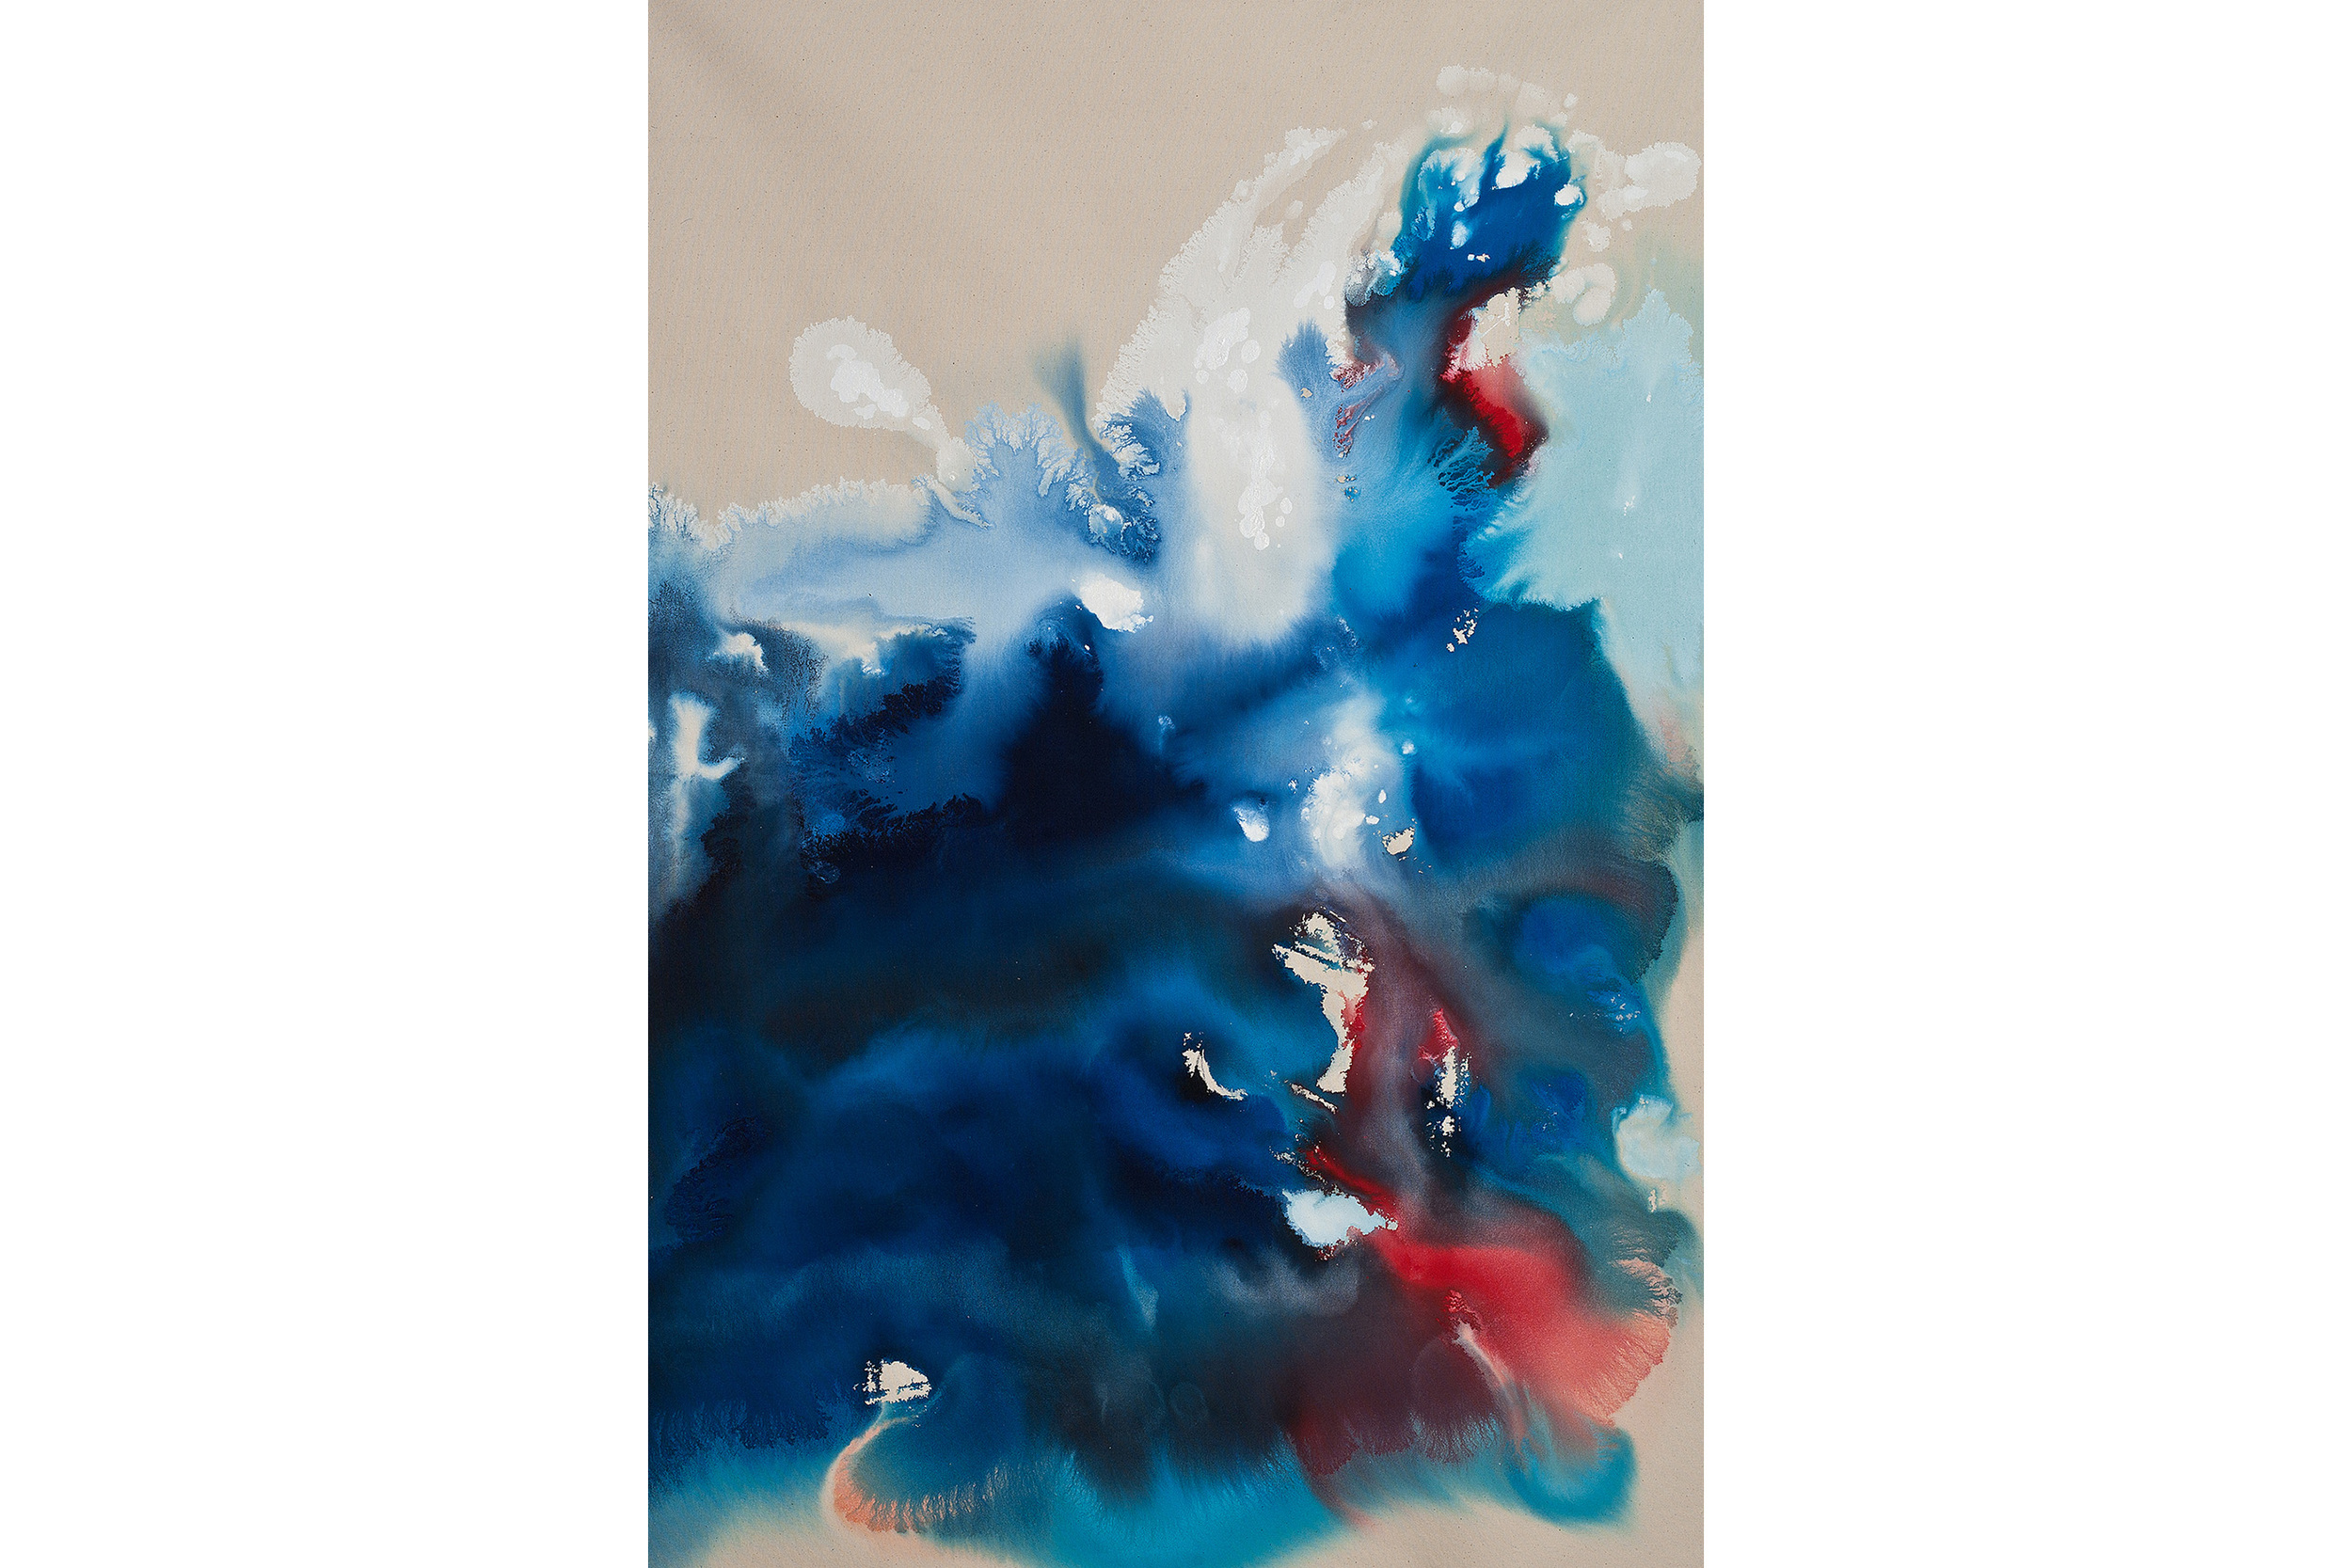 Hanna Seiman Under The Wave 4 PM Acrylic on canvas 48” x 34”, 2016